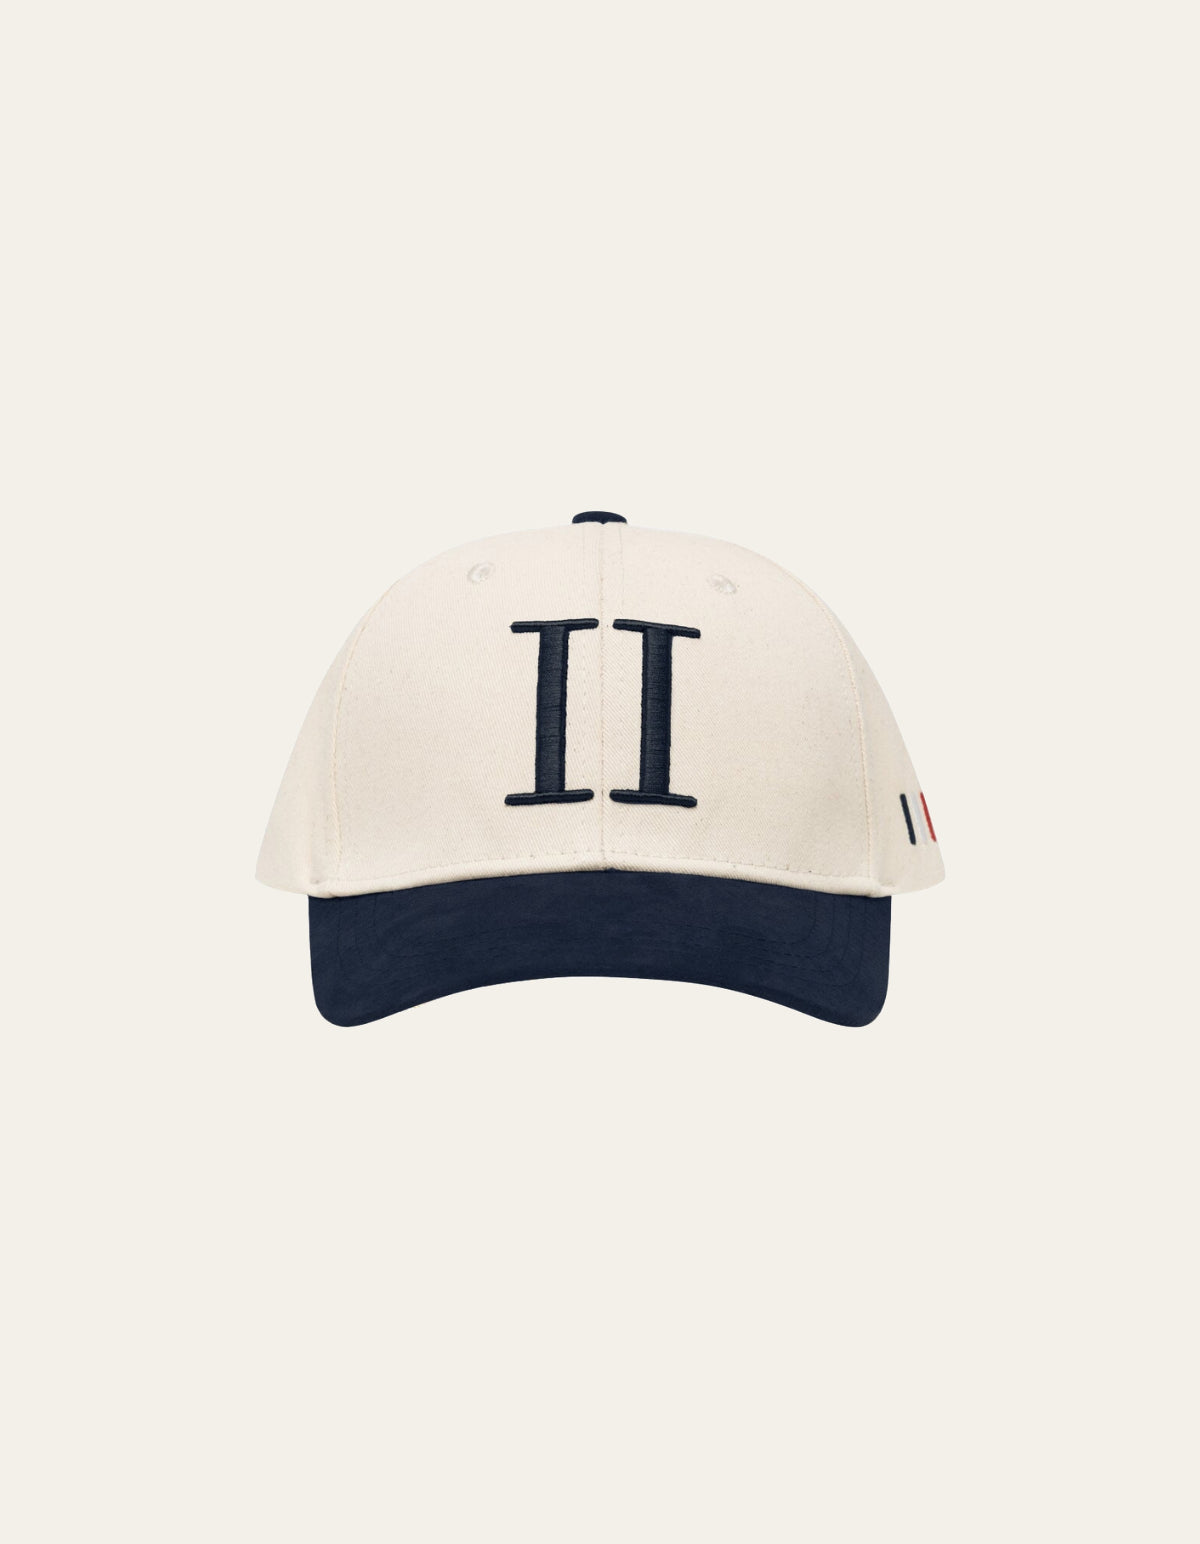 Baseball Cap Suede II - Navy/White – Dark